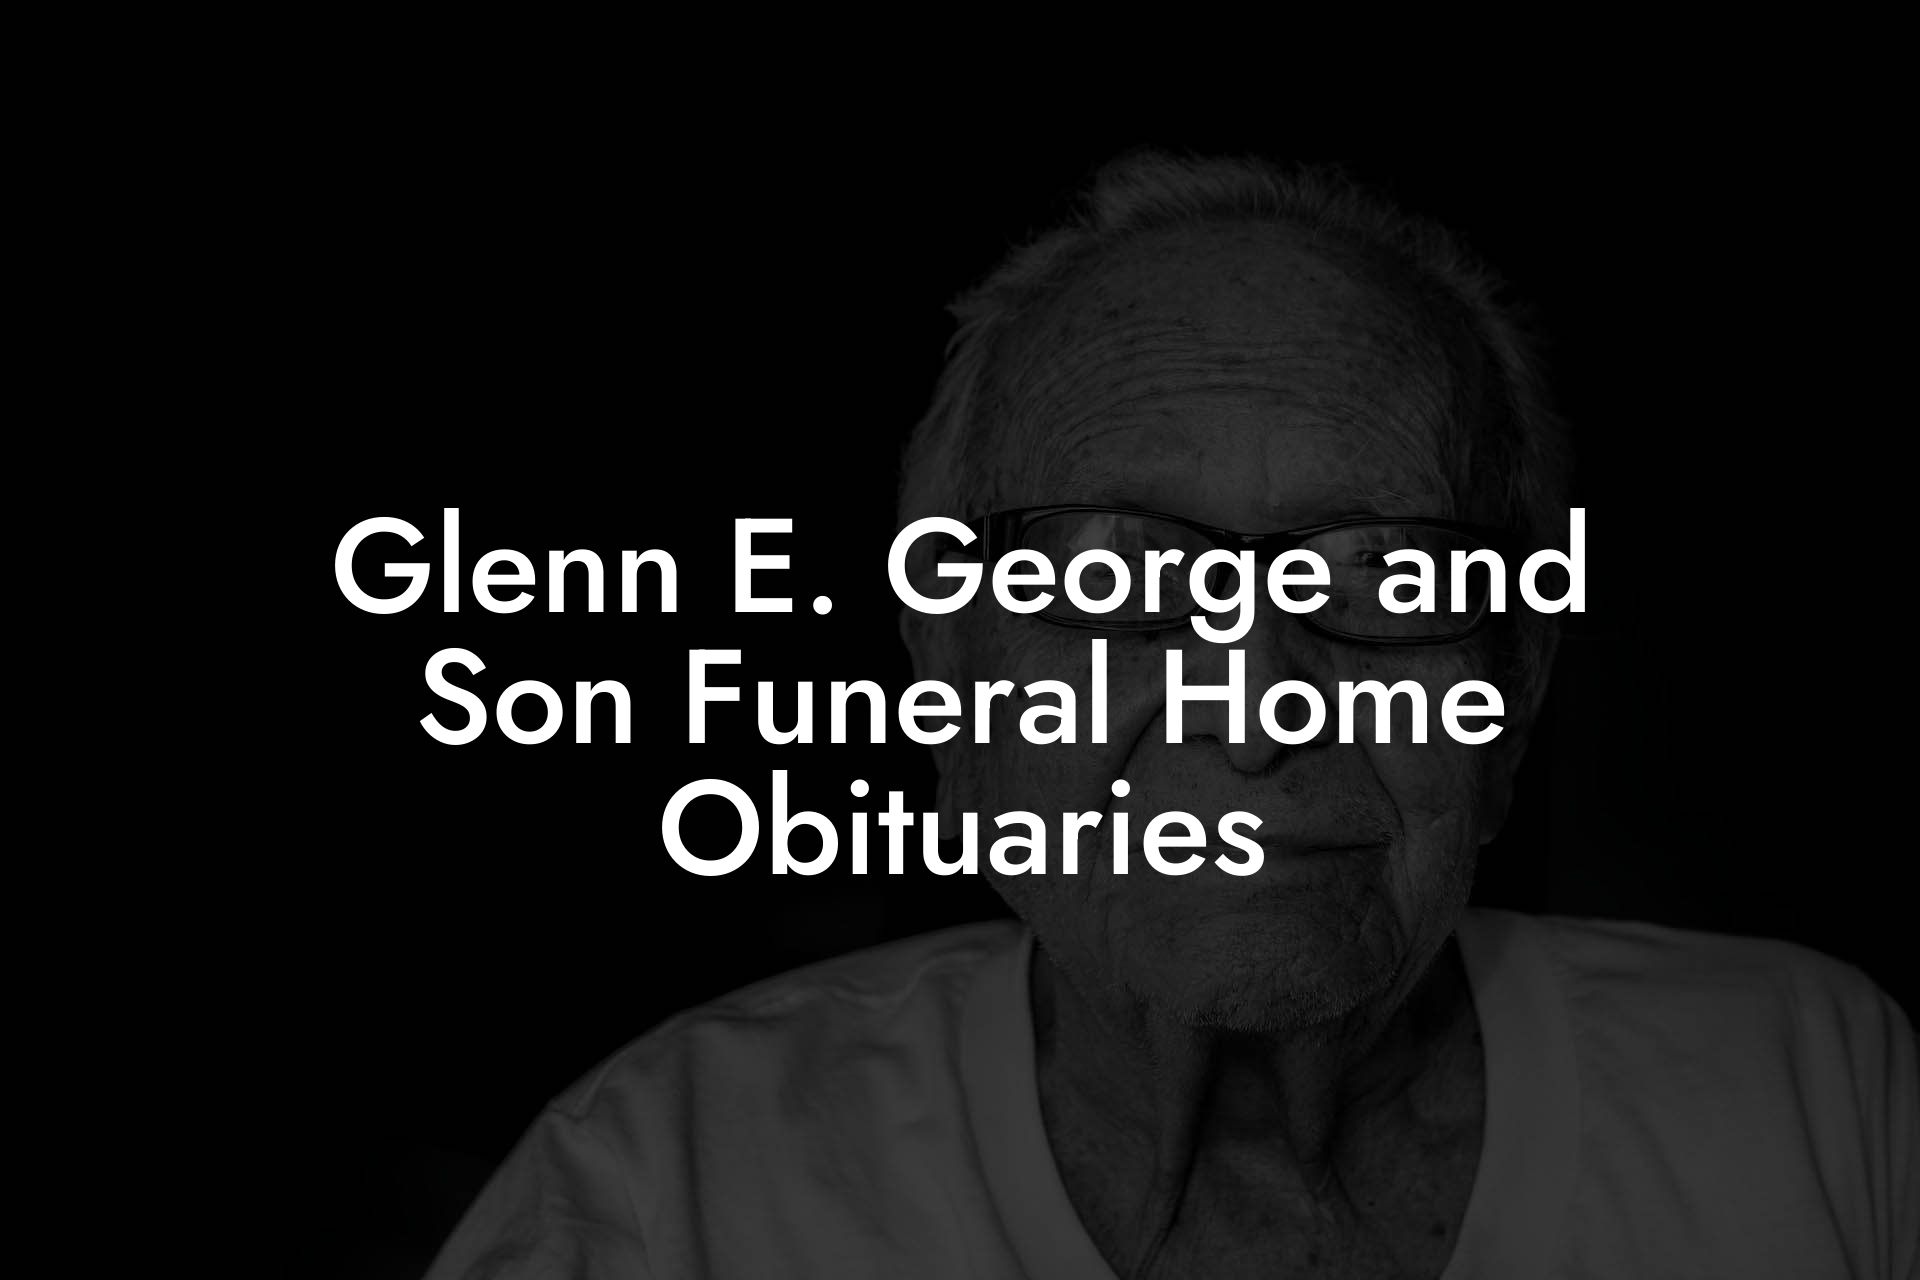 Glenn E. George and Son Funeral Home Obituaries